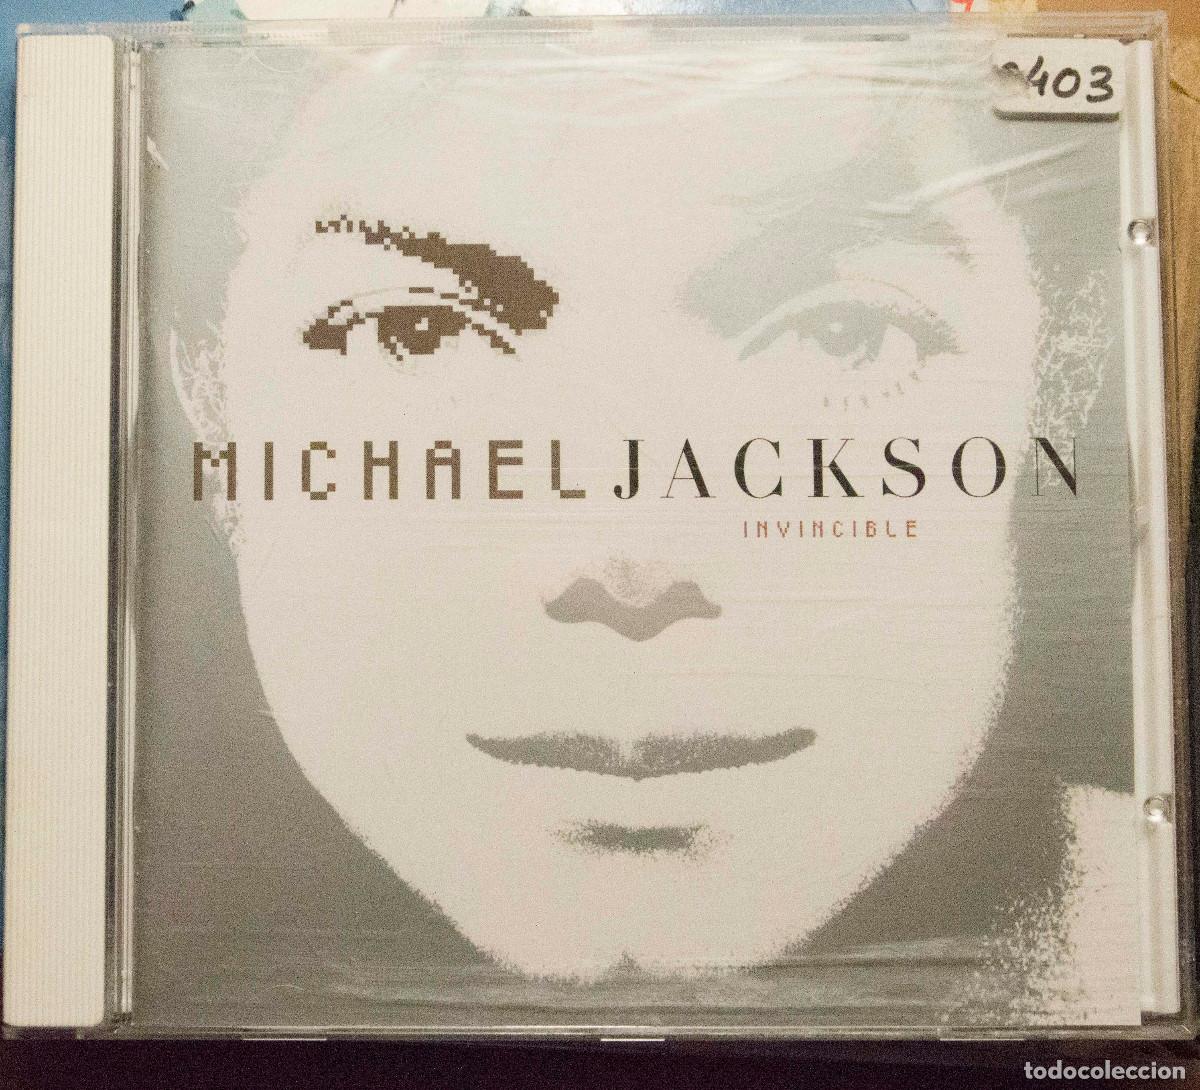 Invincible CD  Shop the Michael Jackson Official Store